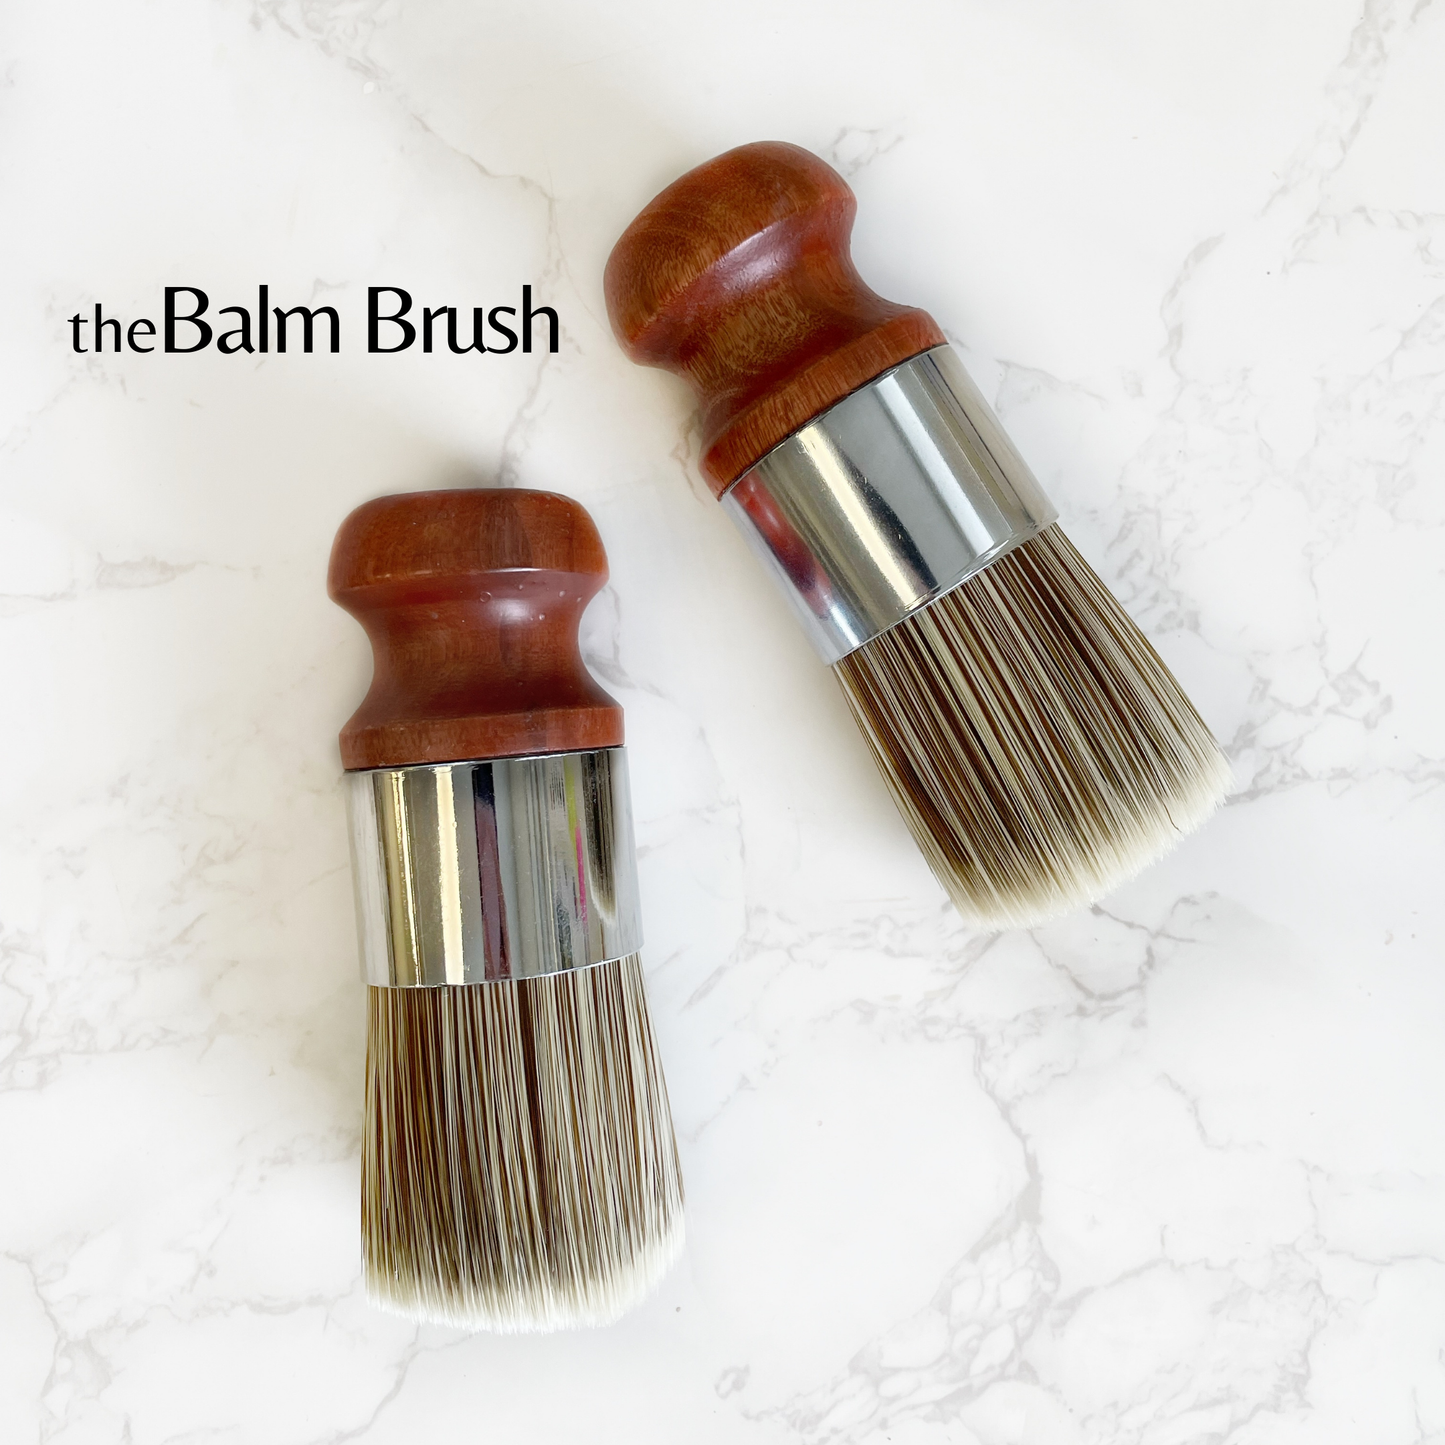 theBalm Brush